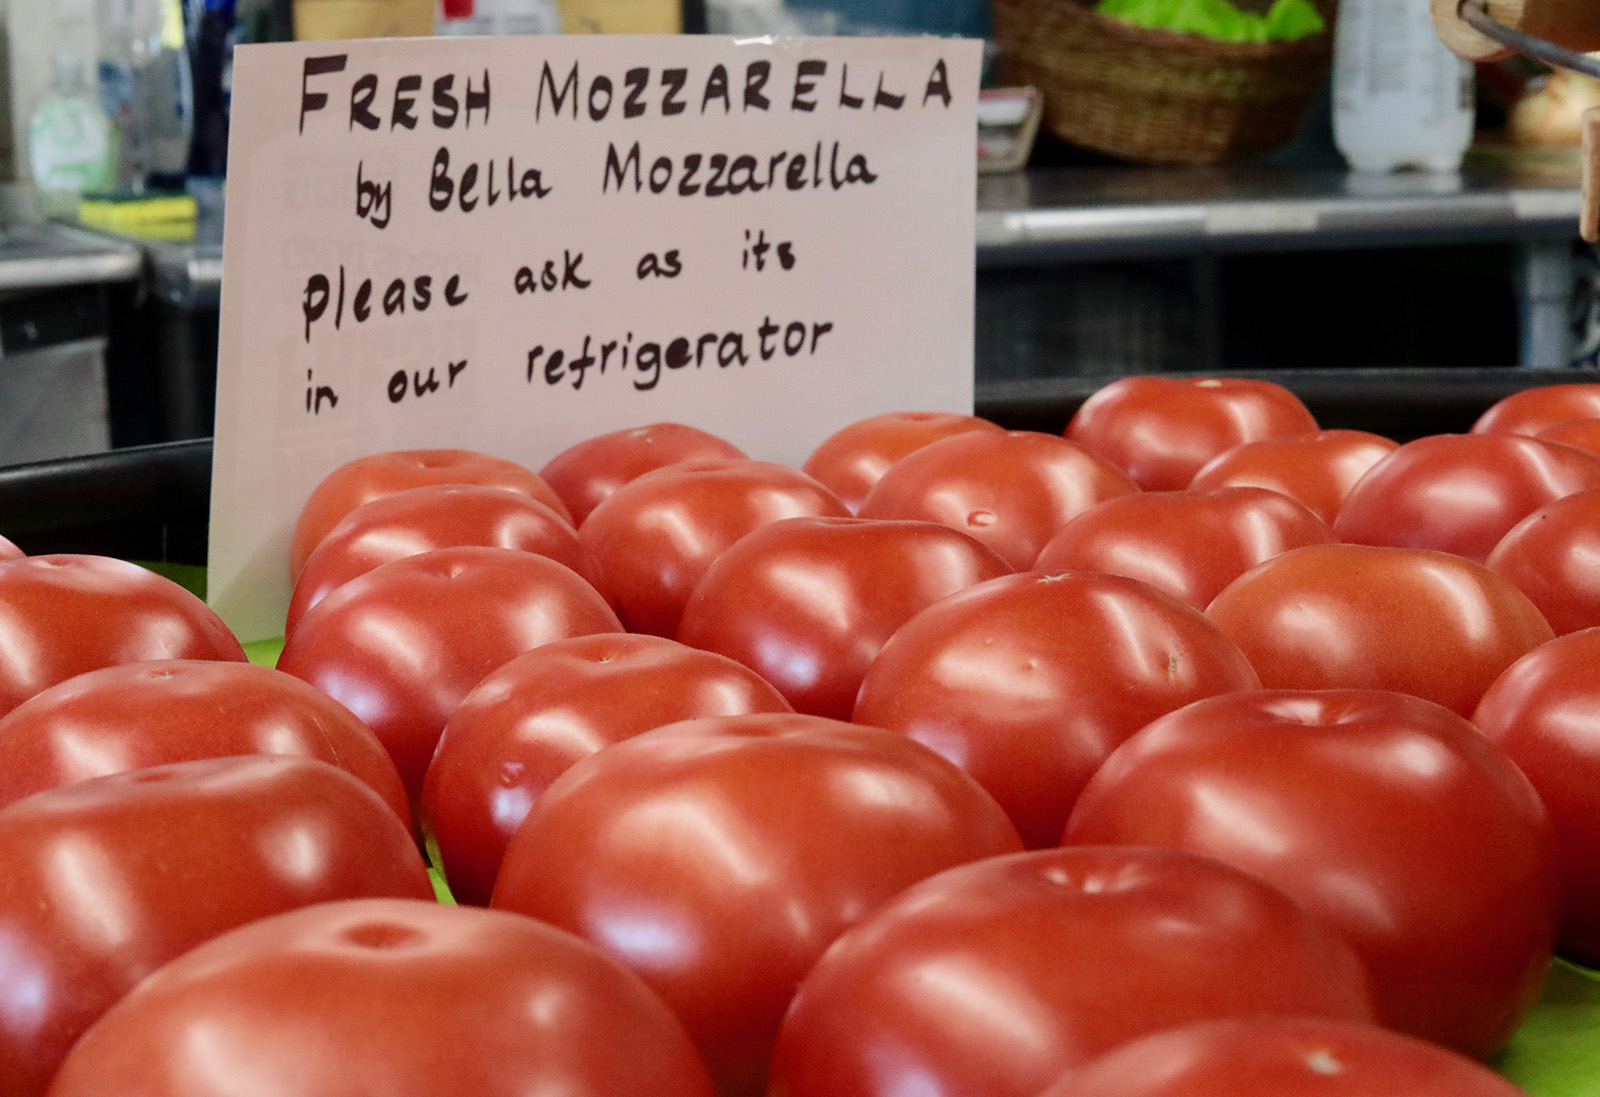 Fresh Local Tomatoes